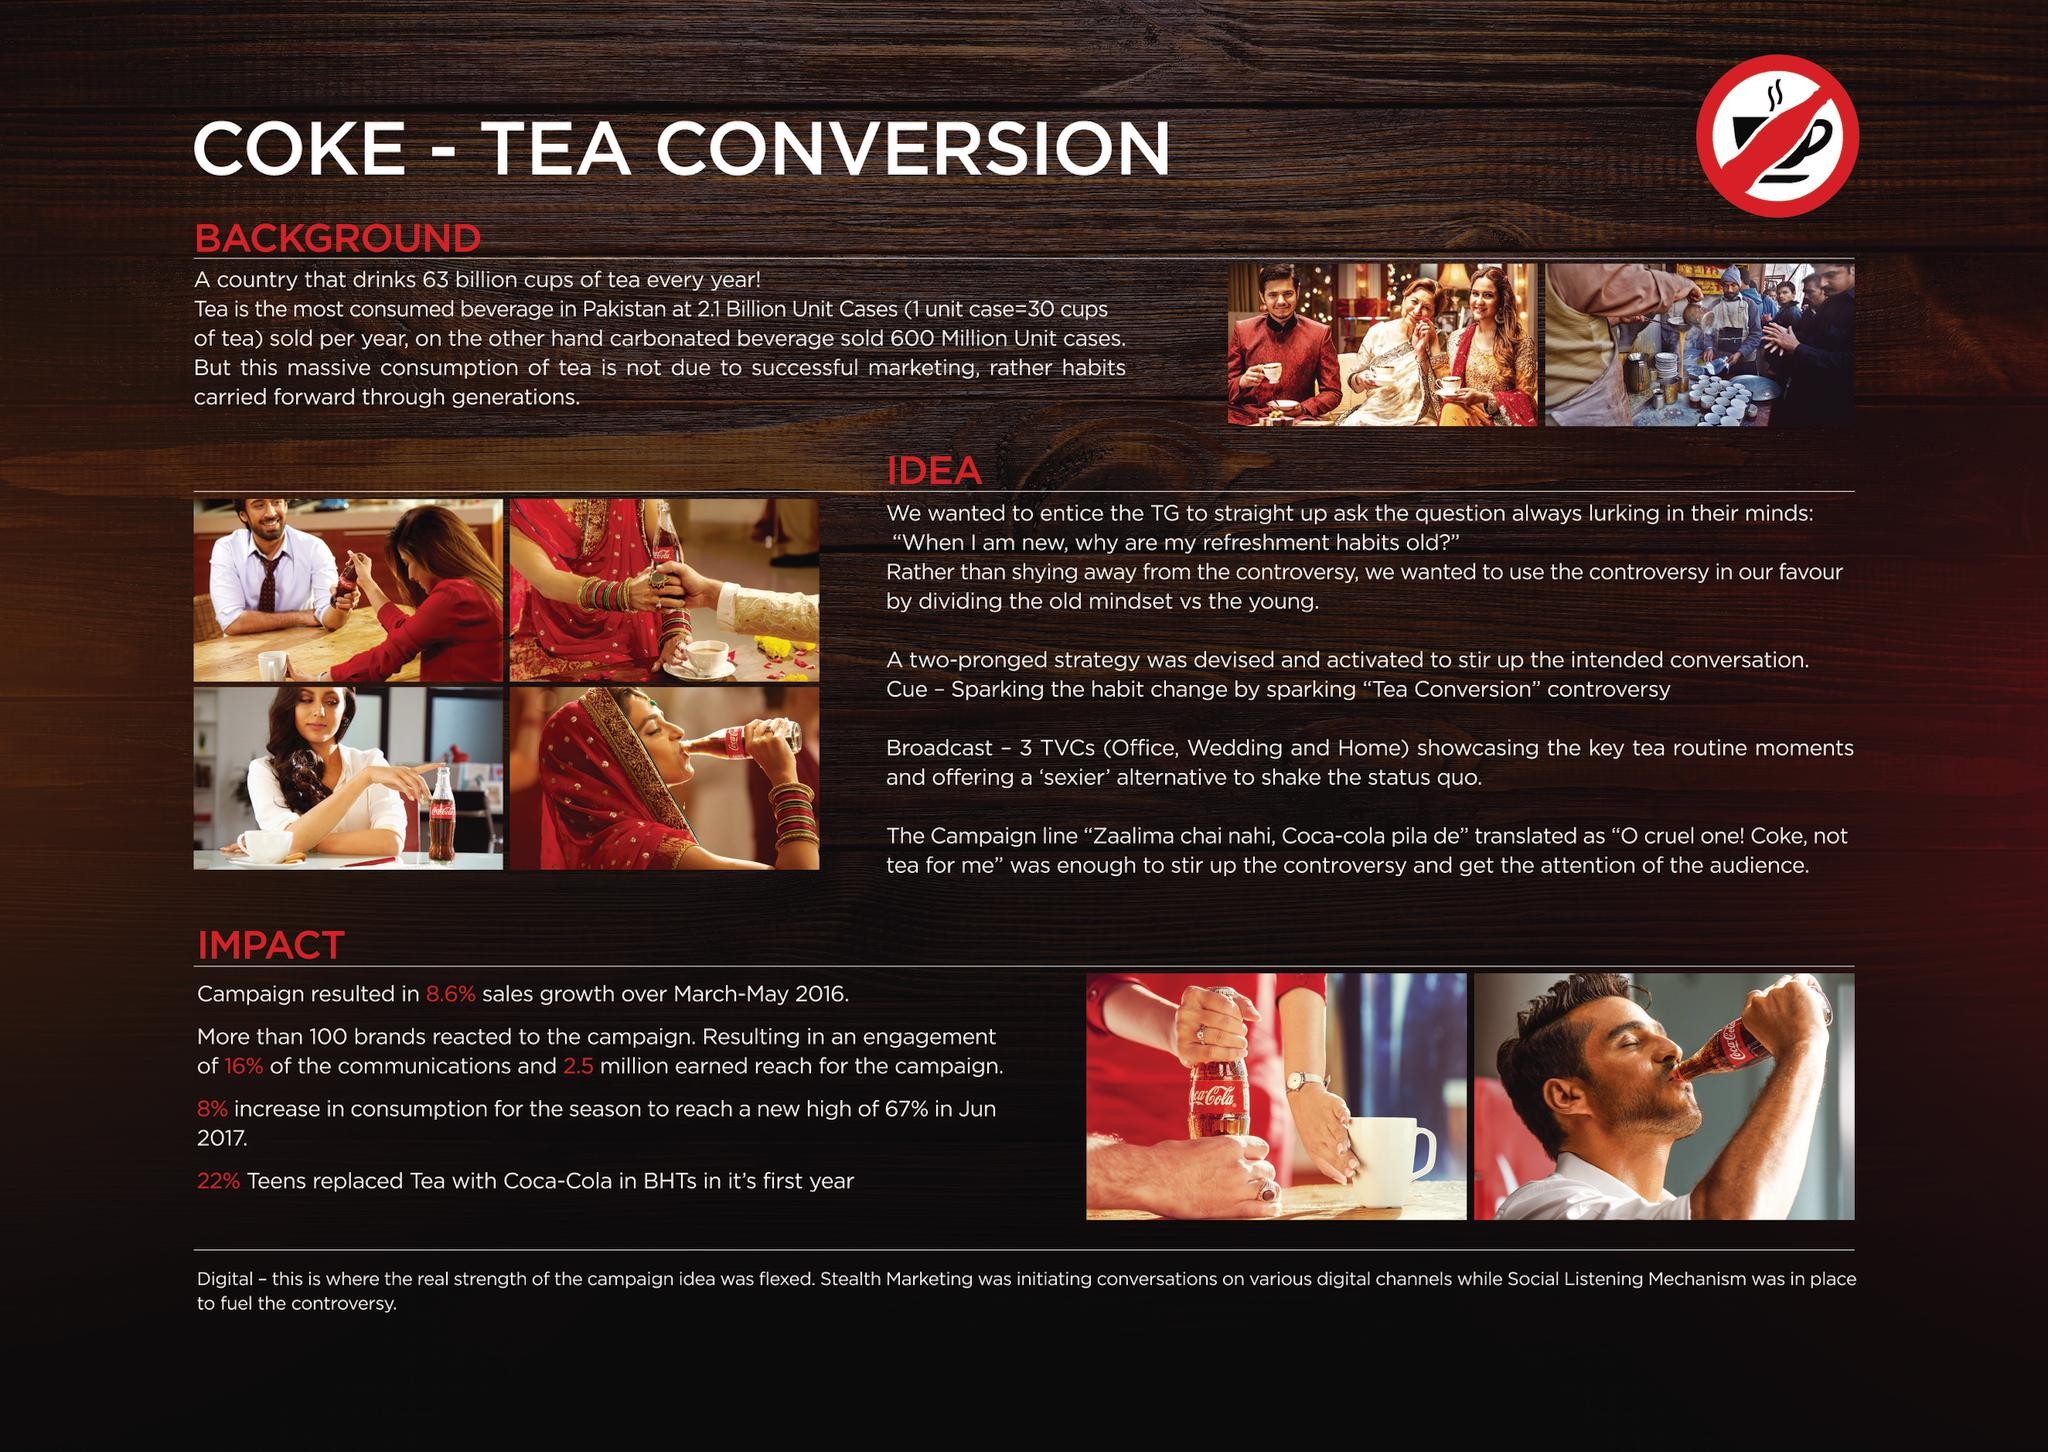 Coke - Tea campaign